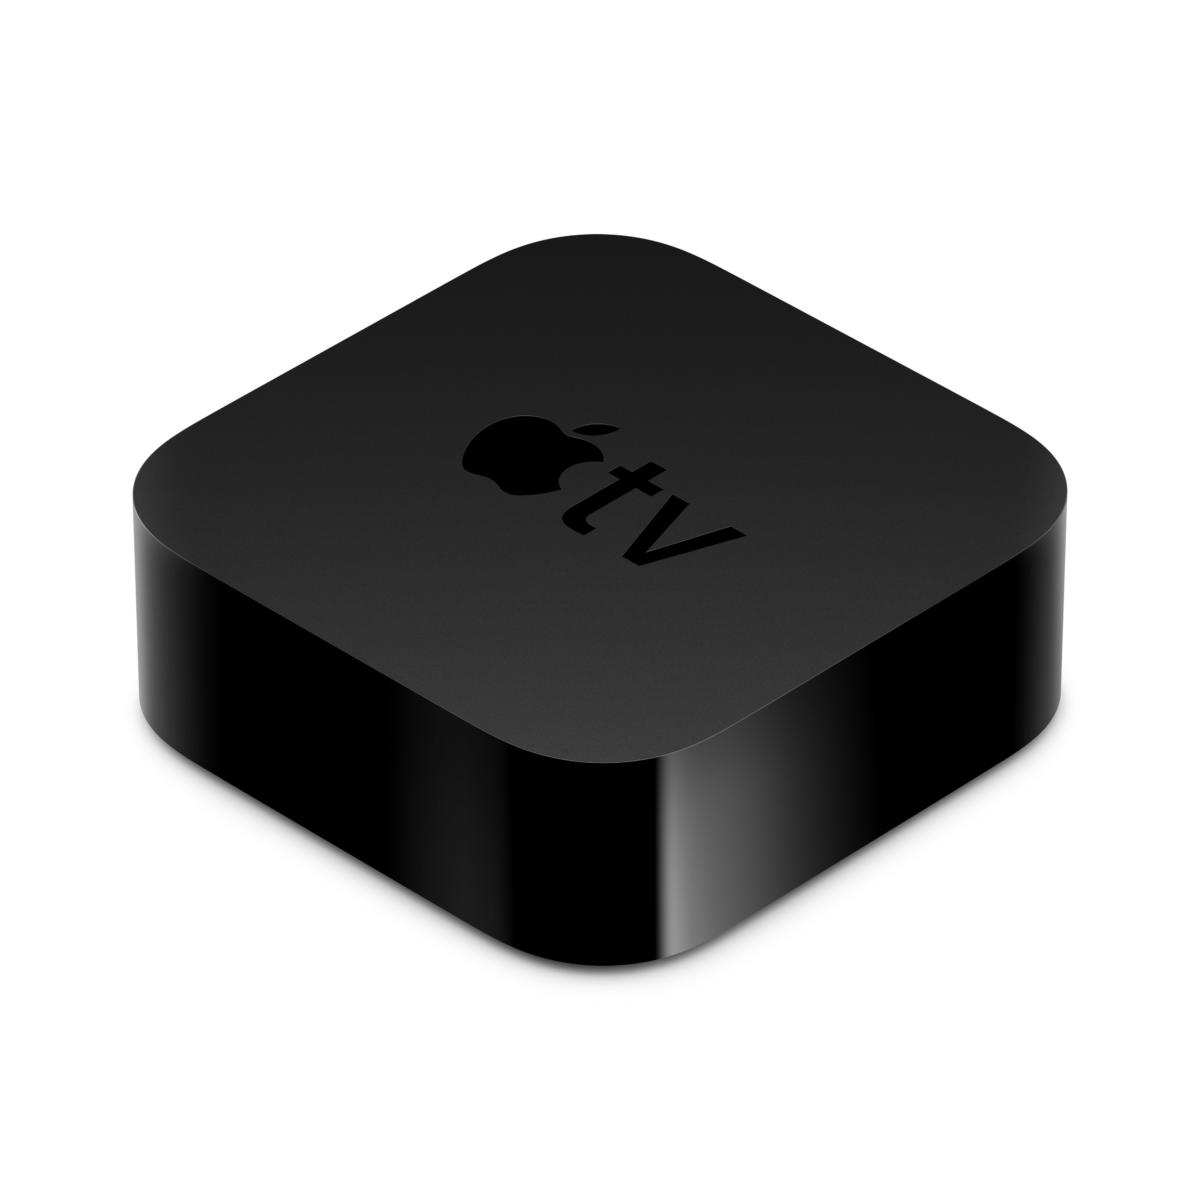 MXH02LL/A - - Apple TV 64GB (2nd Generation)